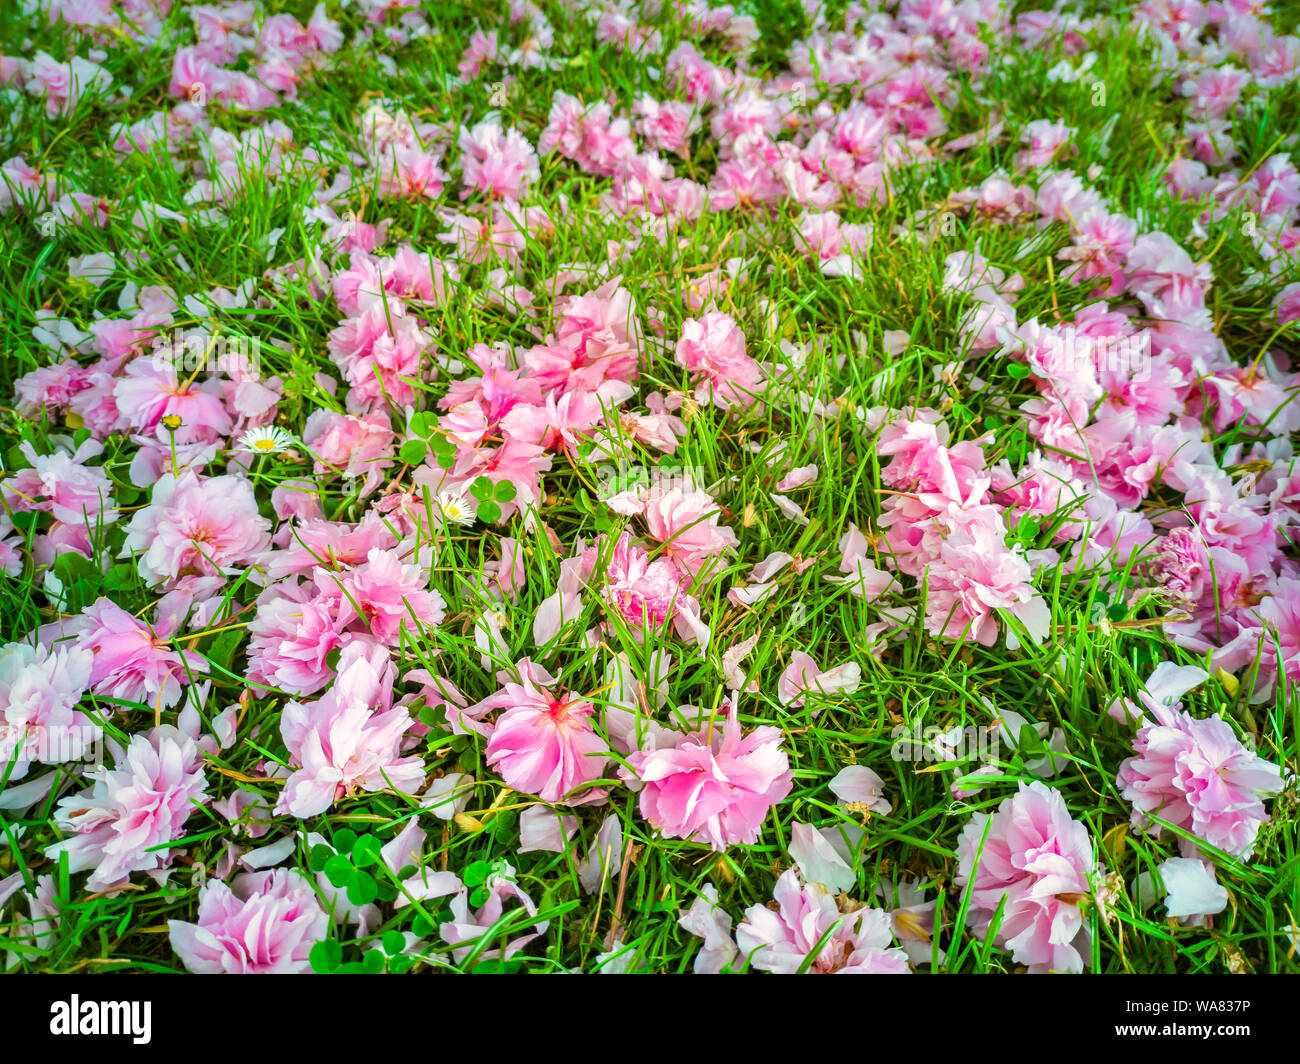 Un jardin tapis de fleurs de cerisier sauvage sur la pelouse. Fleurs de Sakura. Prunus serrulata. Banque D'Images